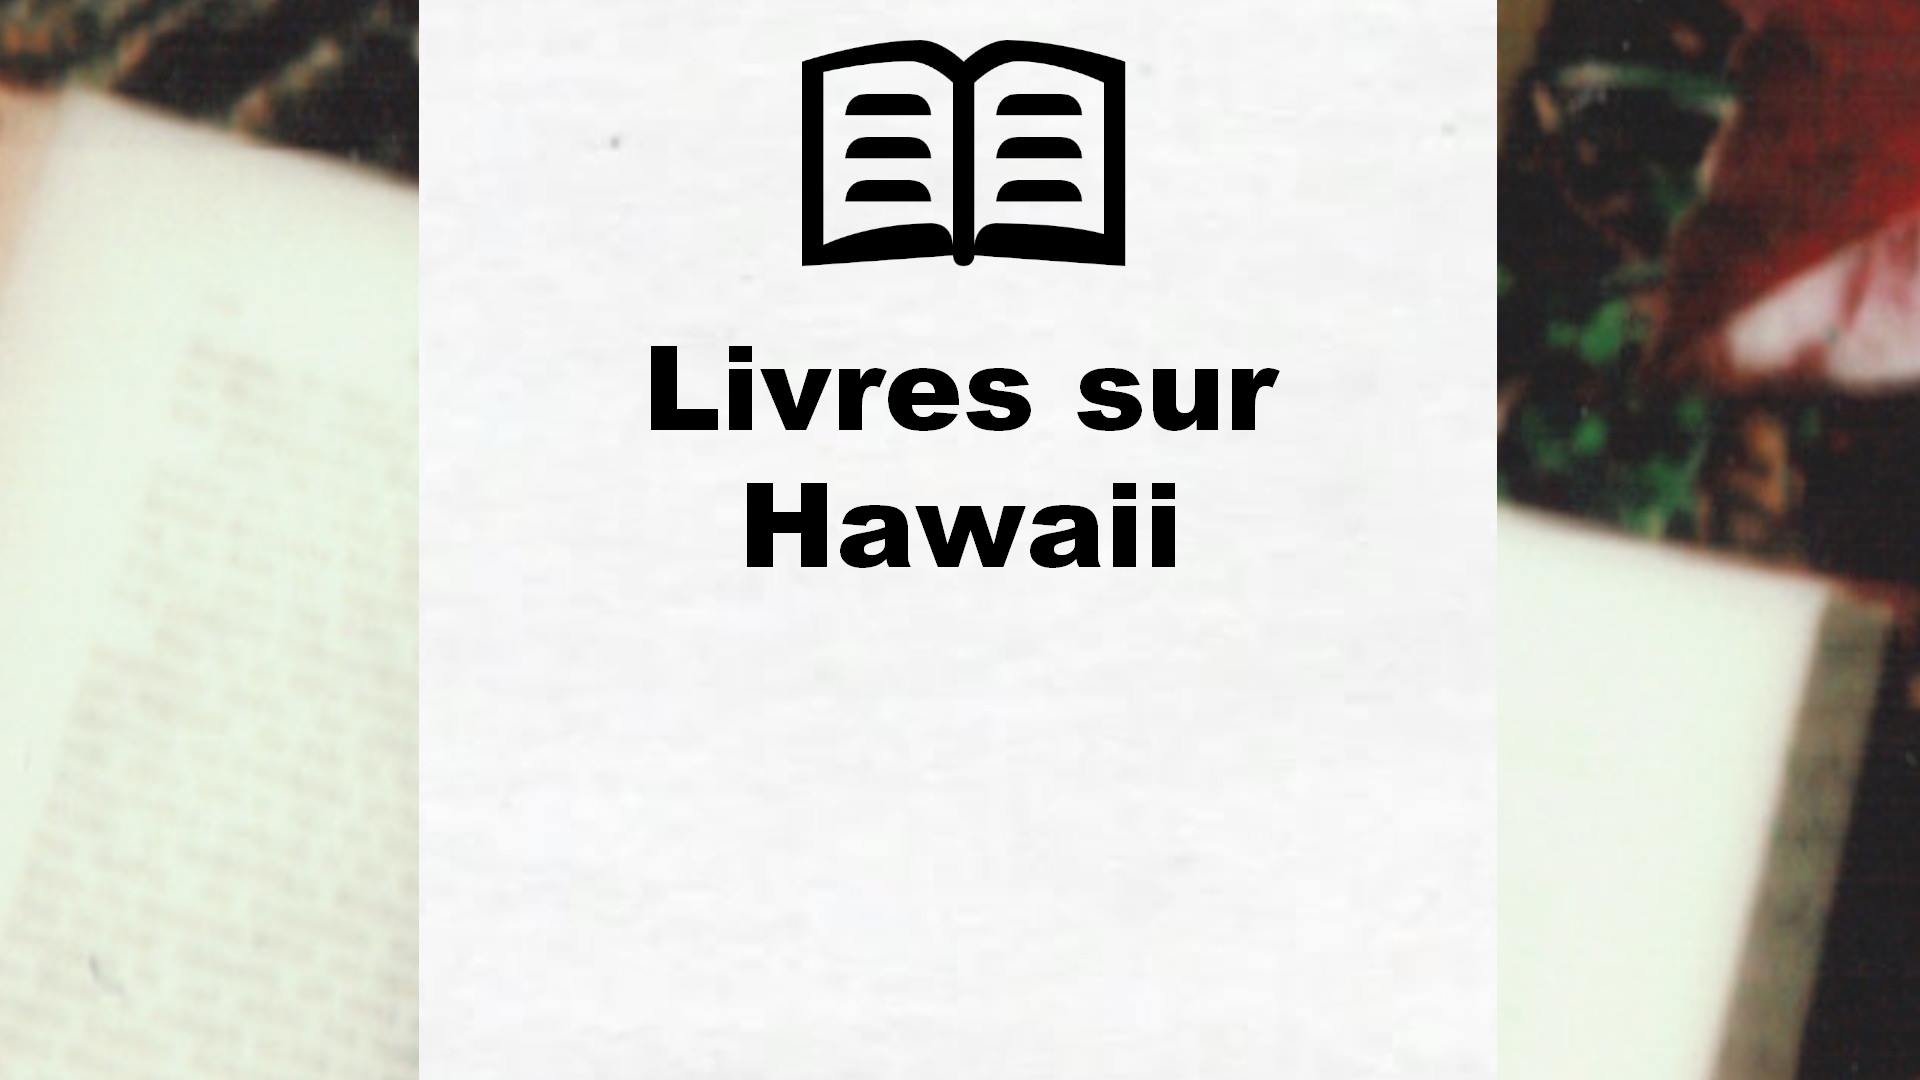 Livres sur Hawaii